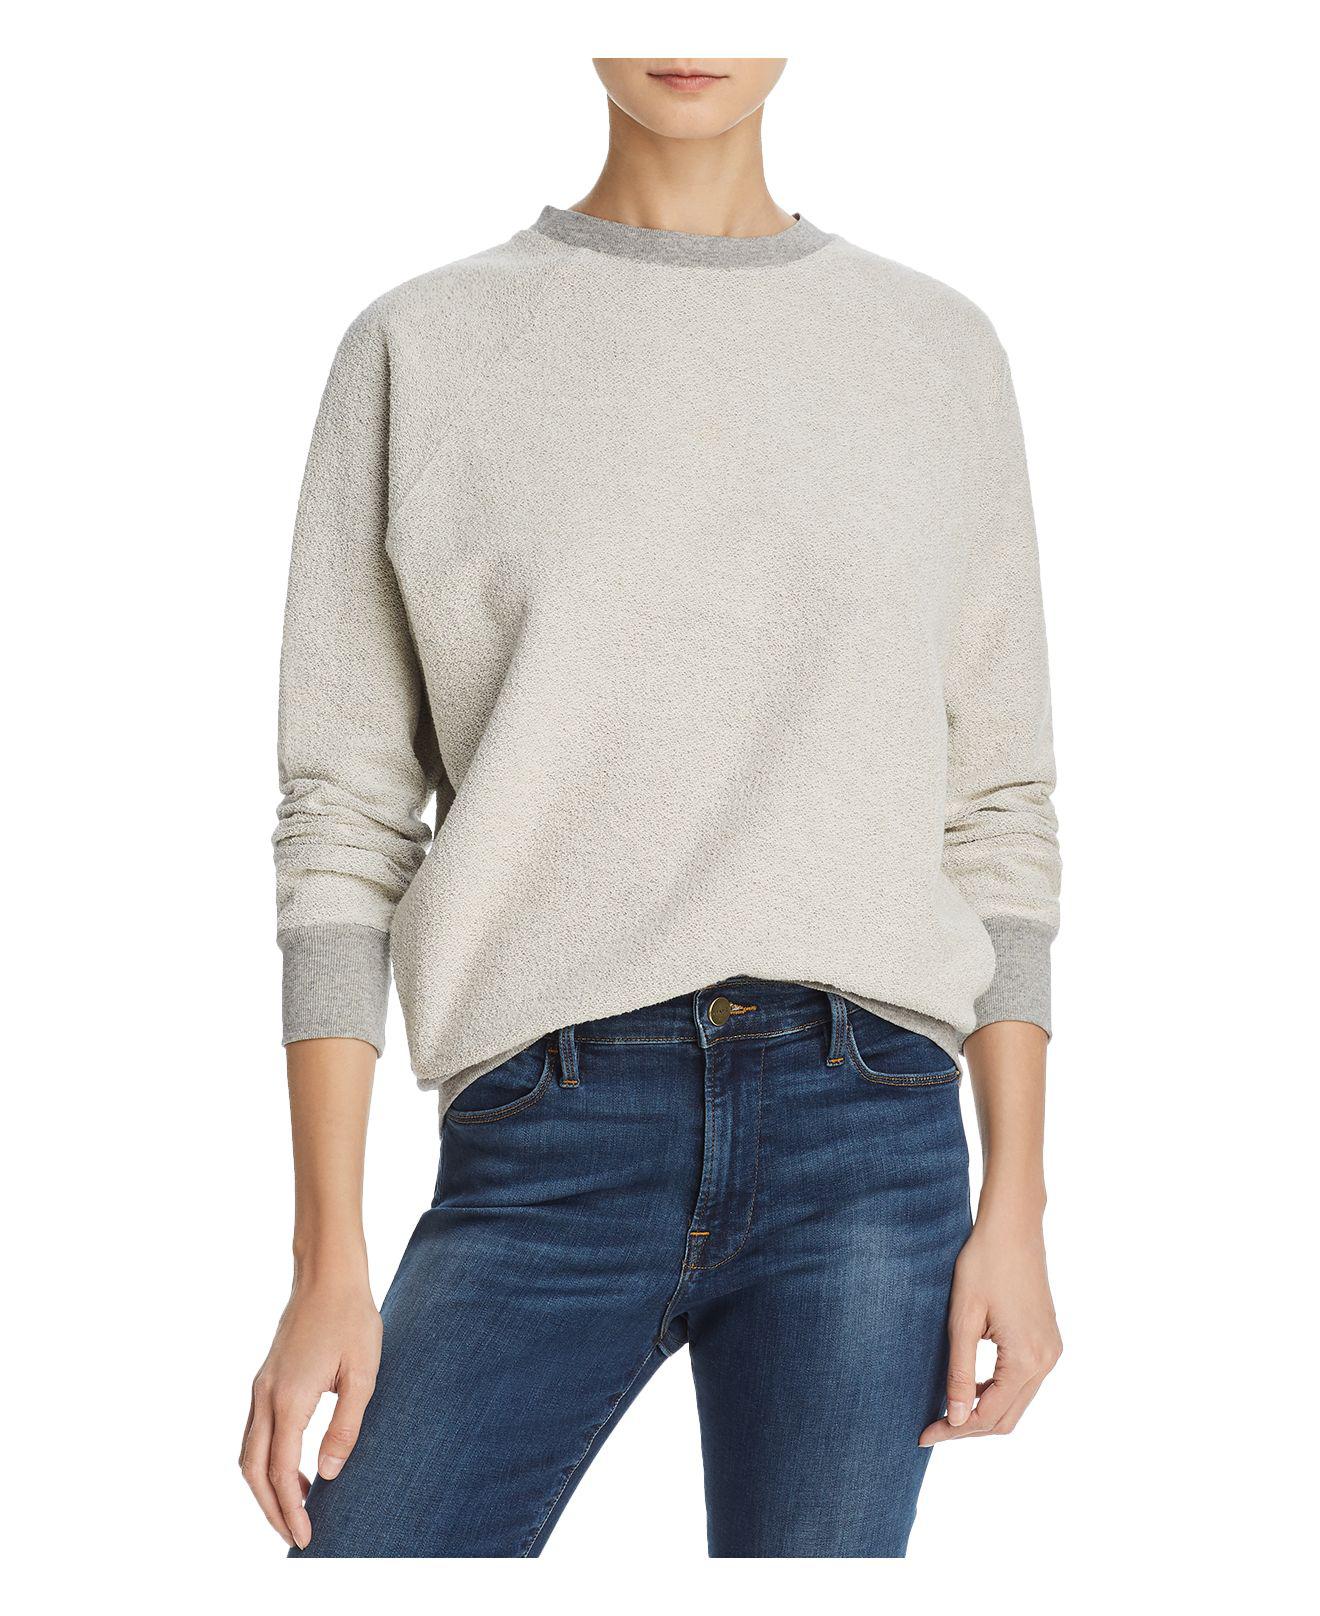 Lyst - Frame Inside-out Raglan Sweatshirt in Gray - Save 22%